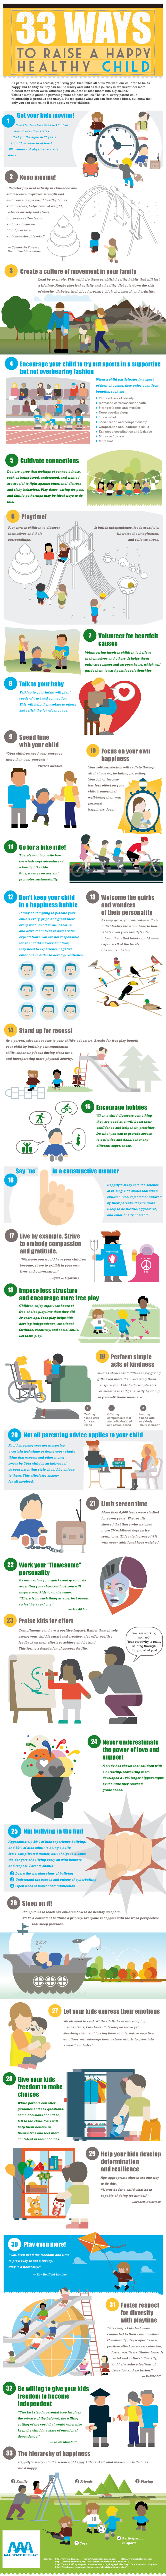 33 Ways to Raise a Happy Health Child - AAAStateofPlay.com - Infographic